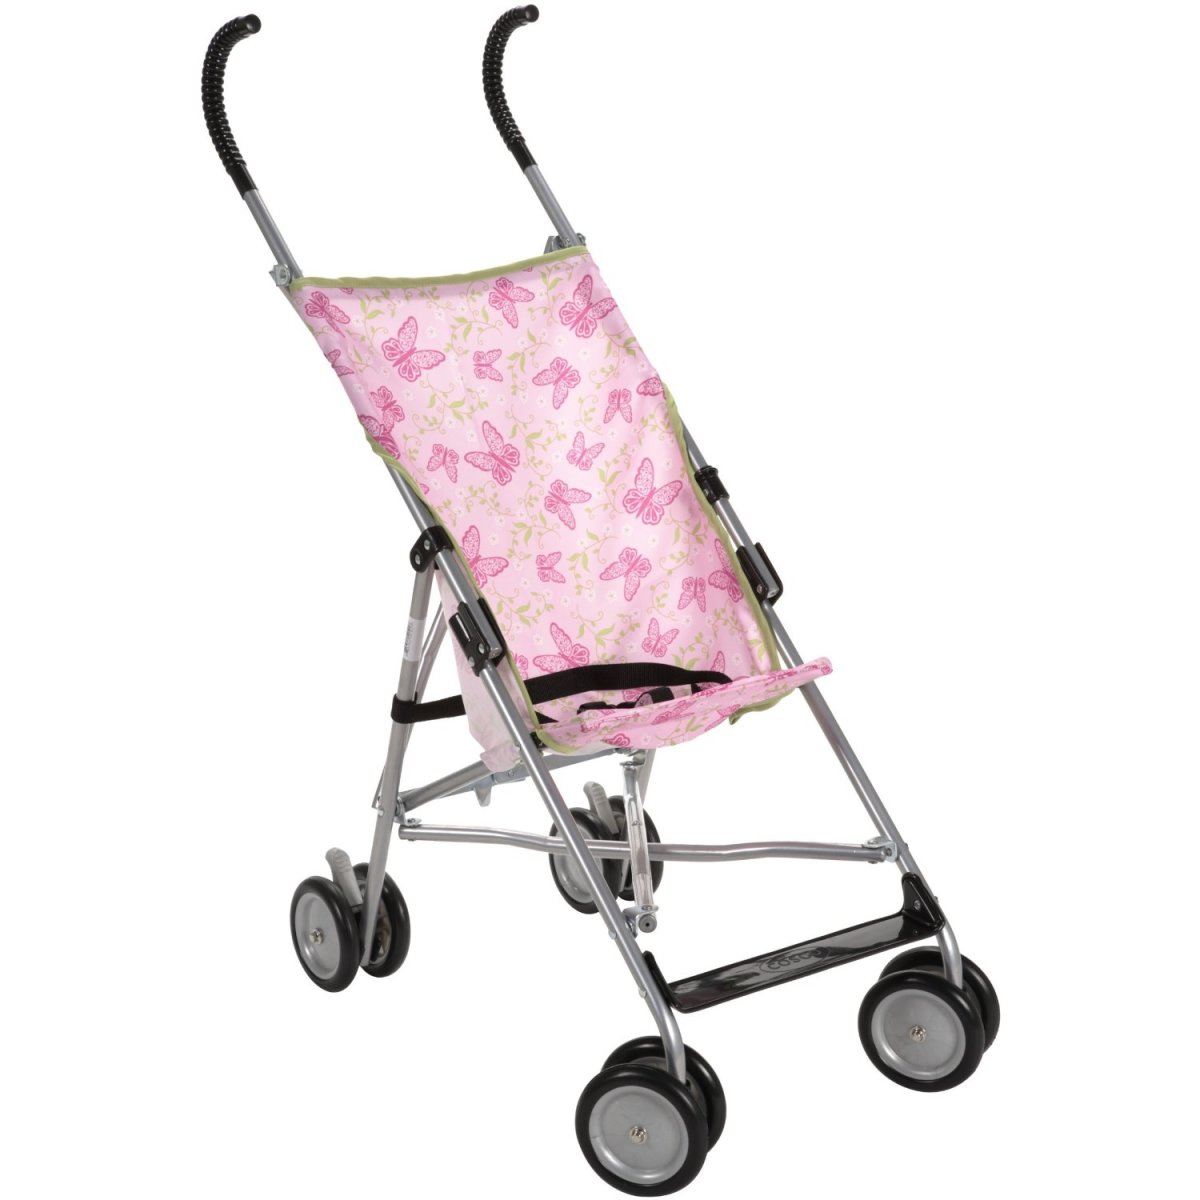 Cosco Stroller And Umbrella Stroller, The Best Lightweight Baby